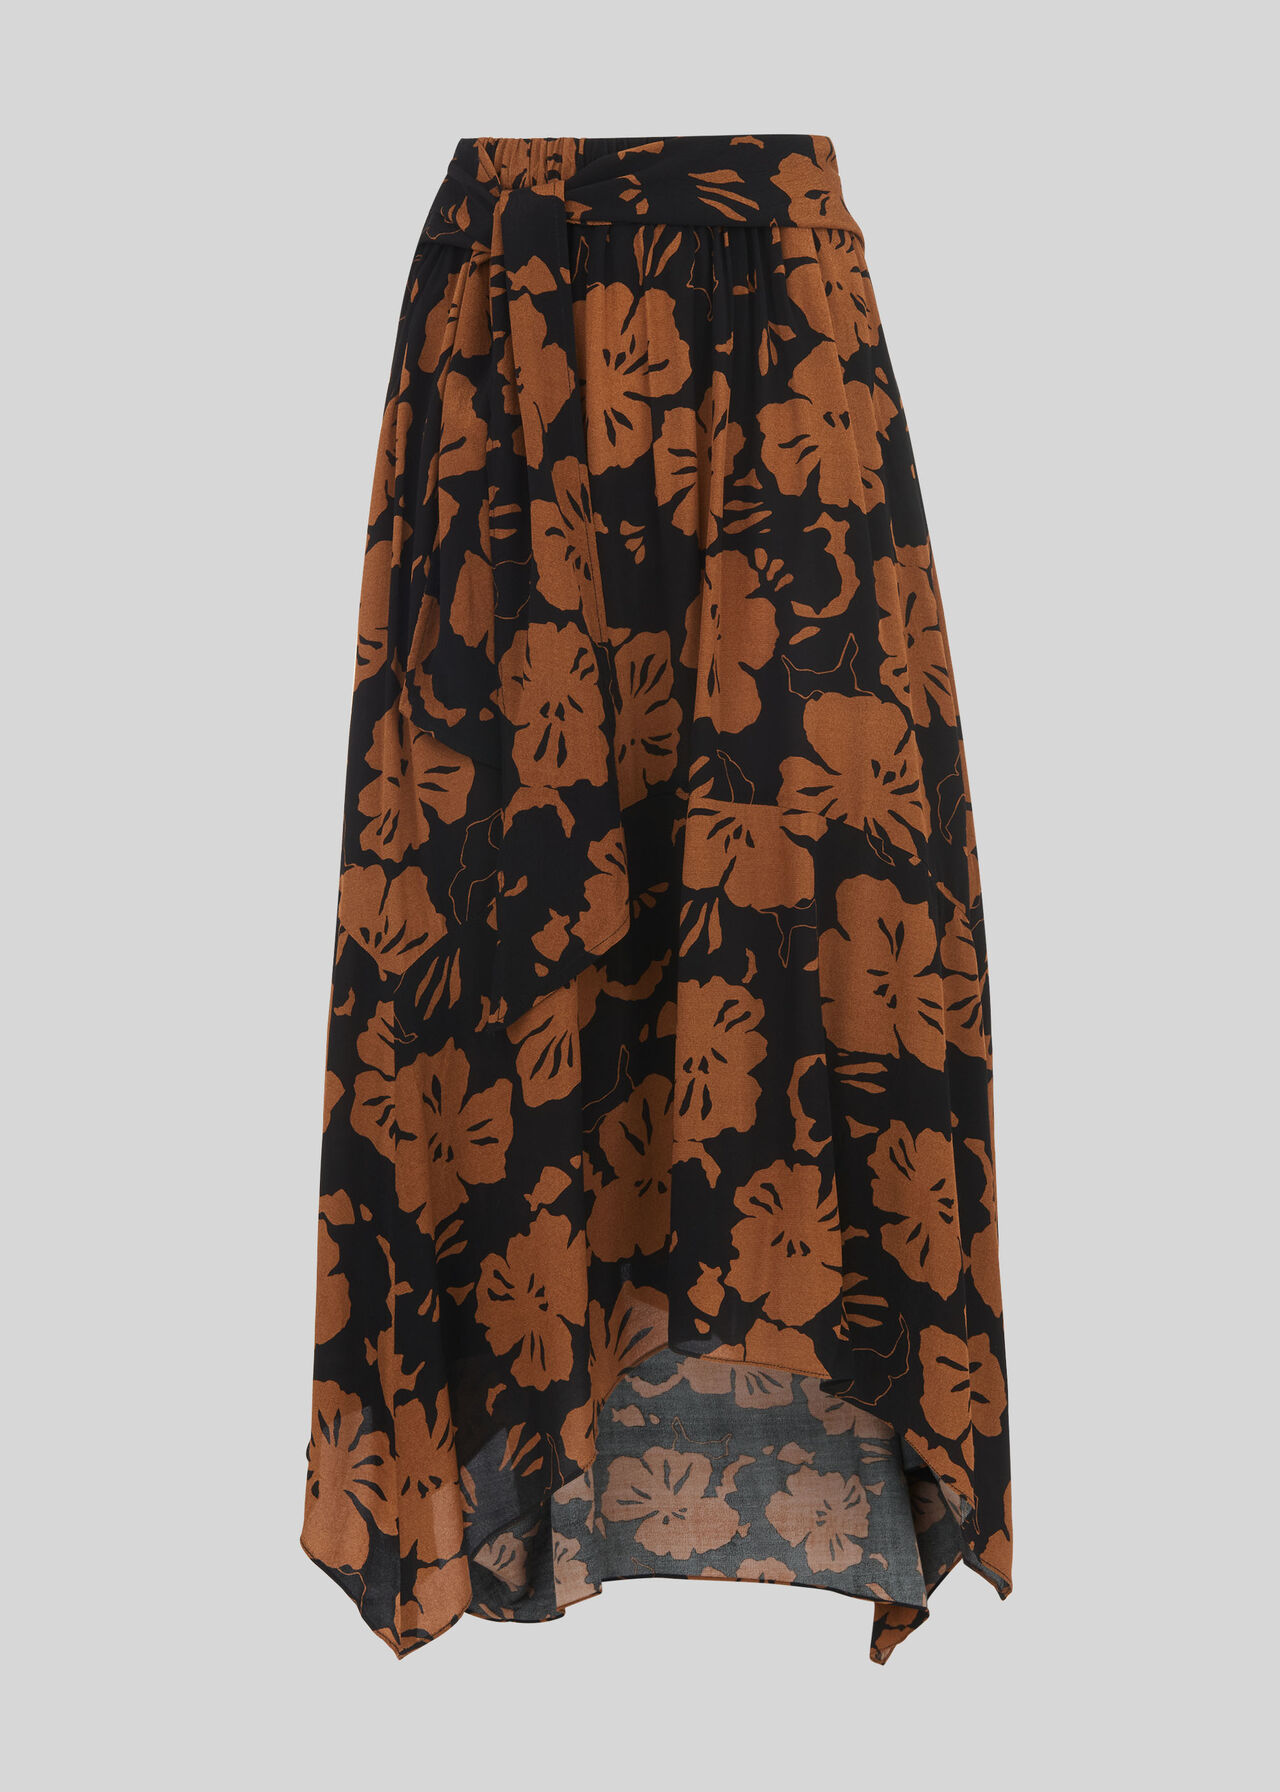 Ari Hibiscus Belted Skirt Brown/Multi